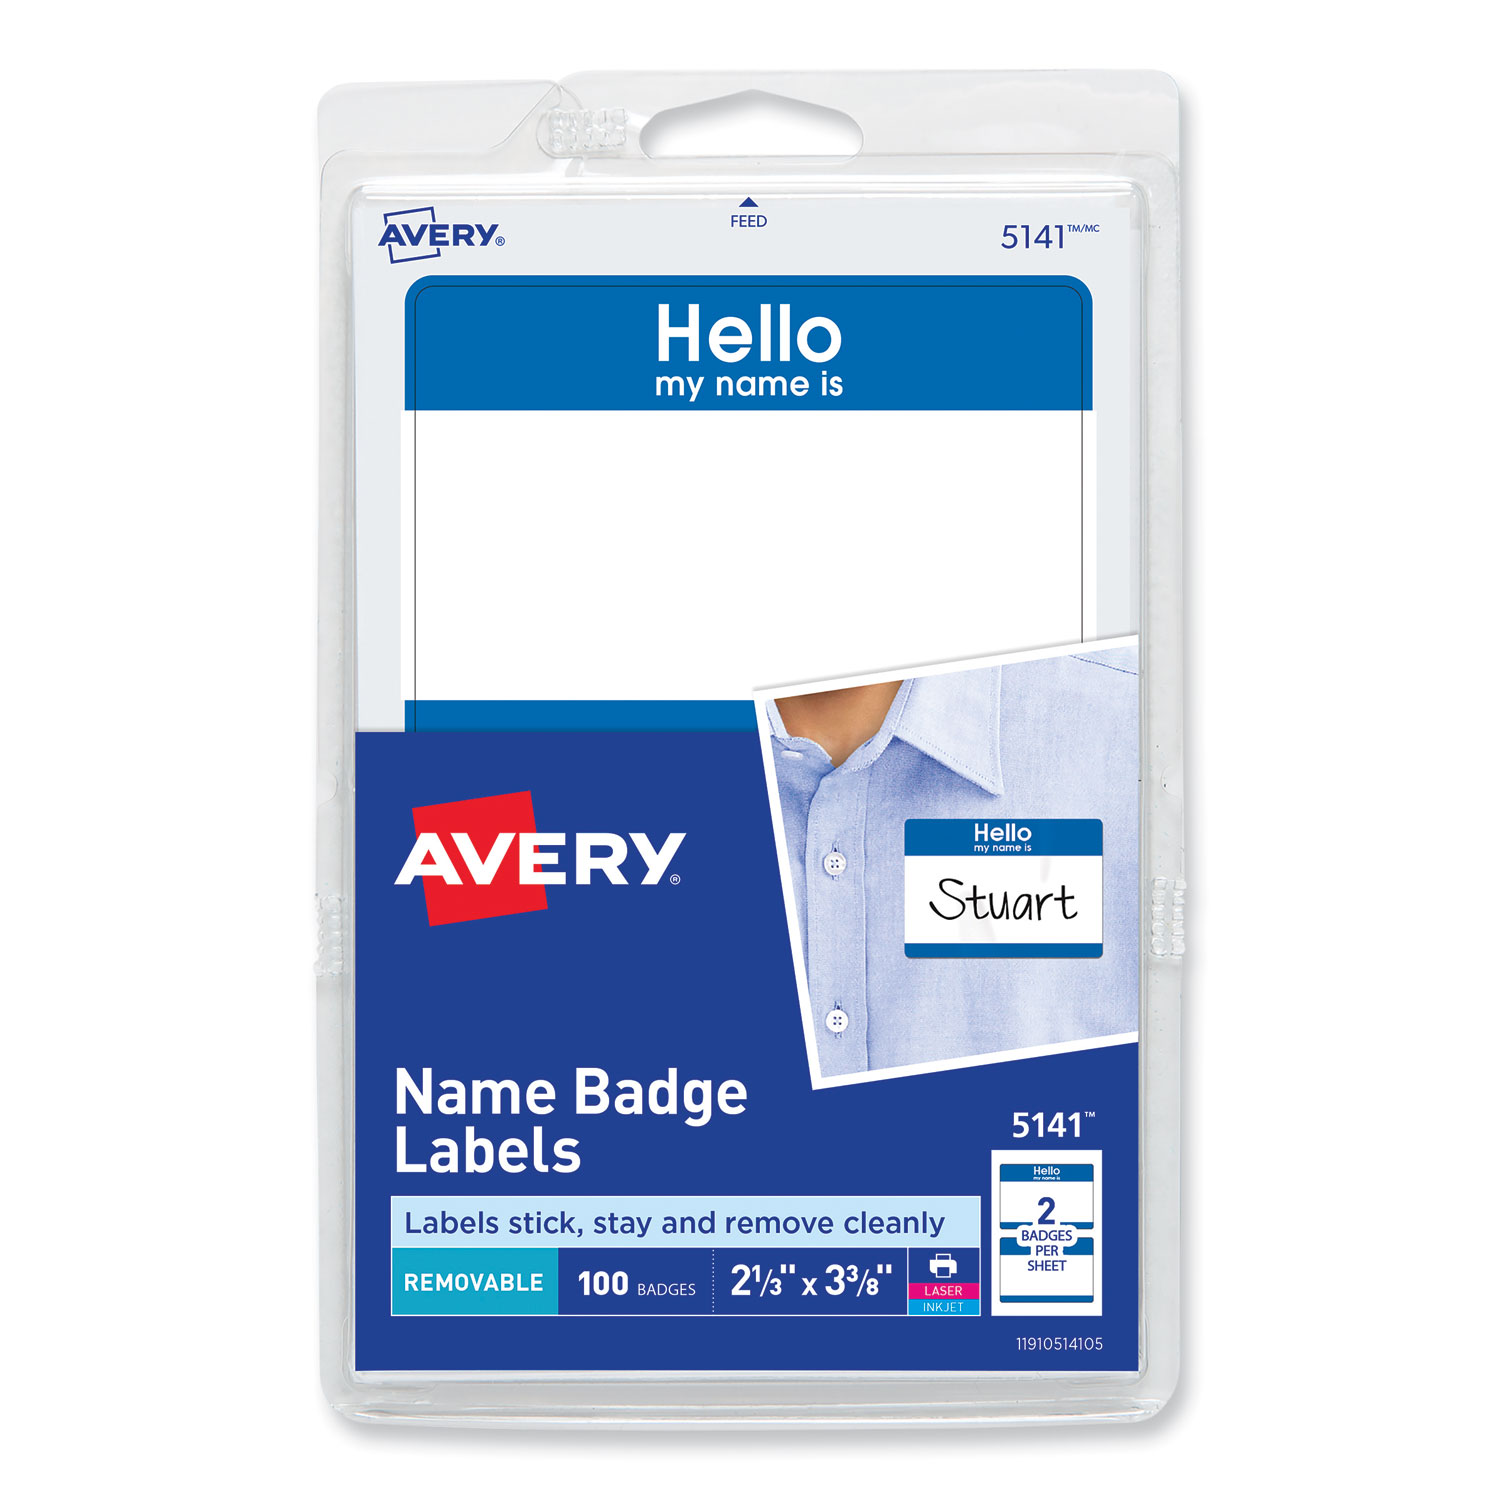 Printable Adhesive Name Badges, 3.38 x 2.33, Blue "Hello", 100/Pack